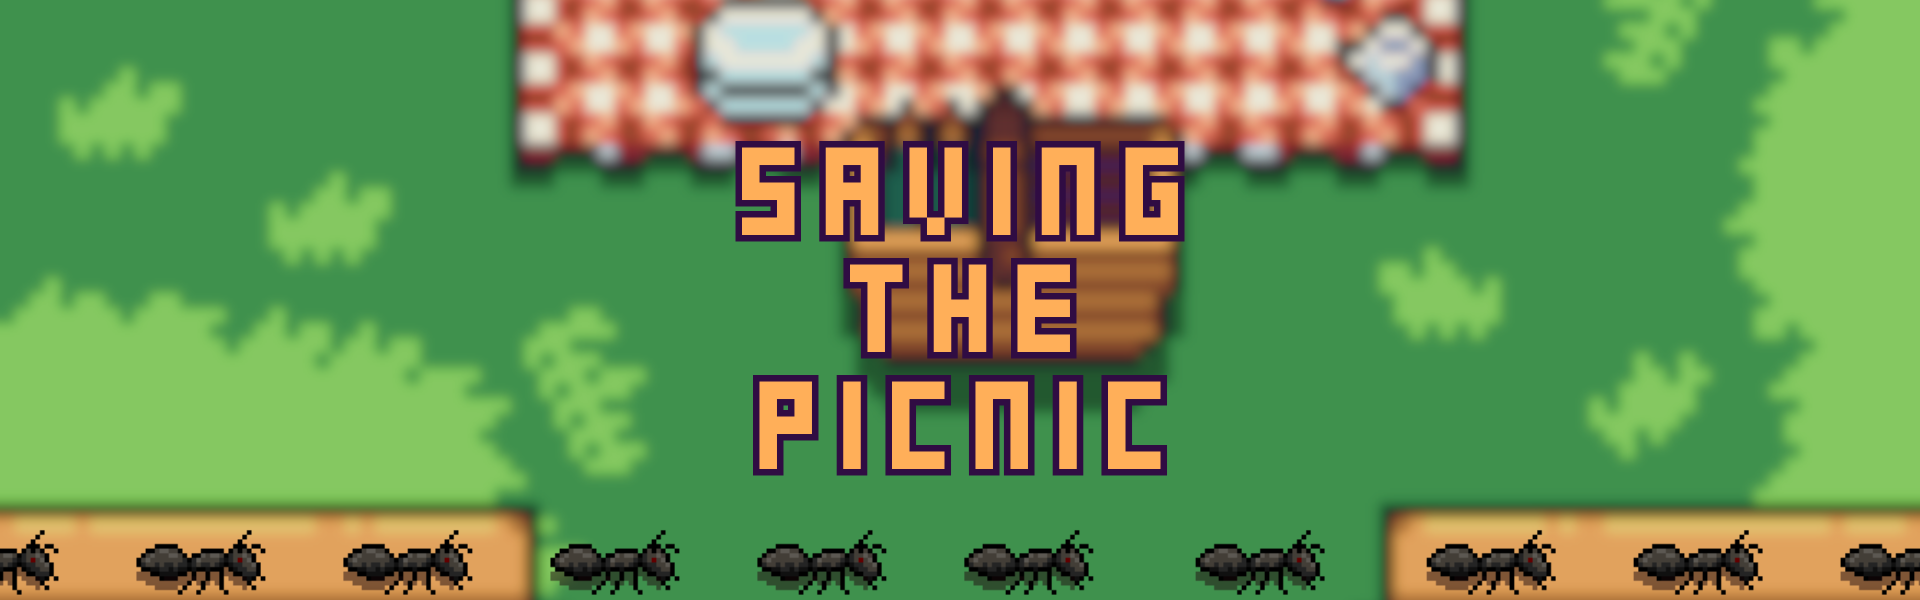 Saving the picnic